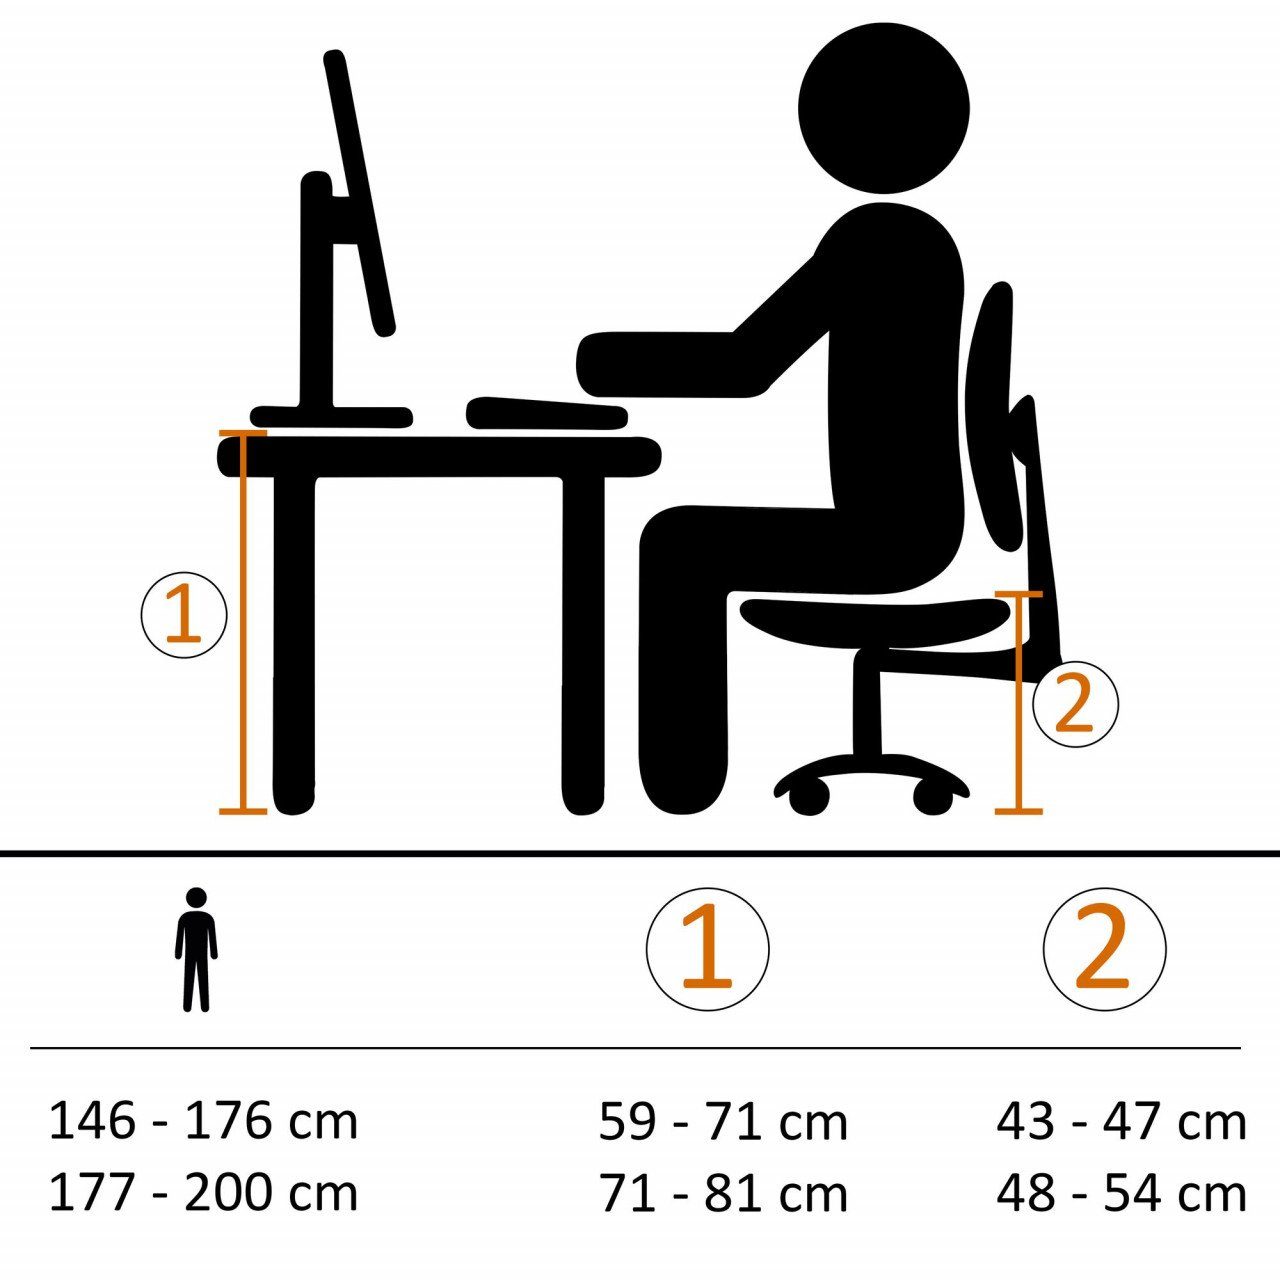 Bürostuhl bis Schwarz furnicato Schreibtischstuhl Bezug Bürodrehstuhl Kunstleder kg 120